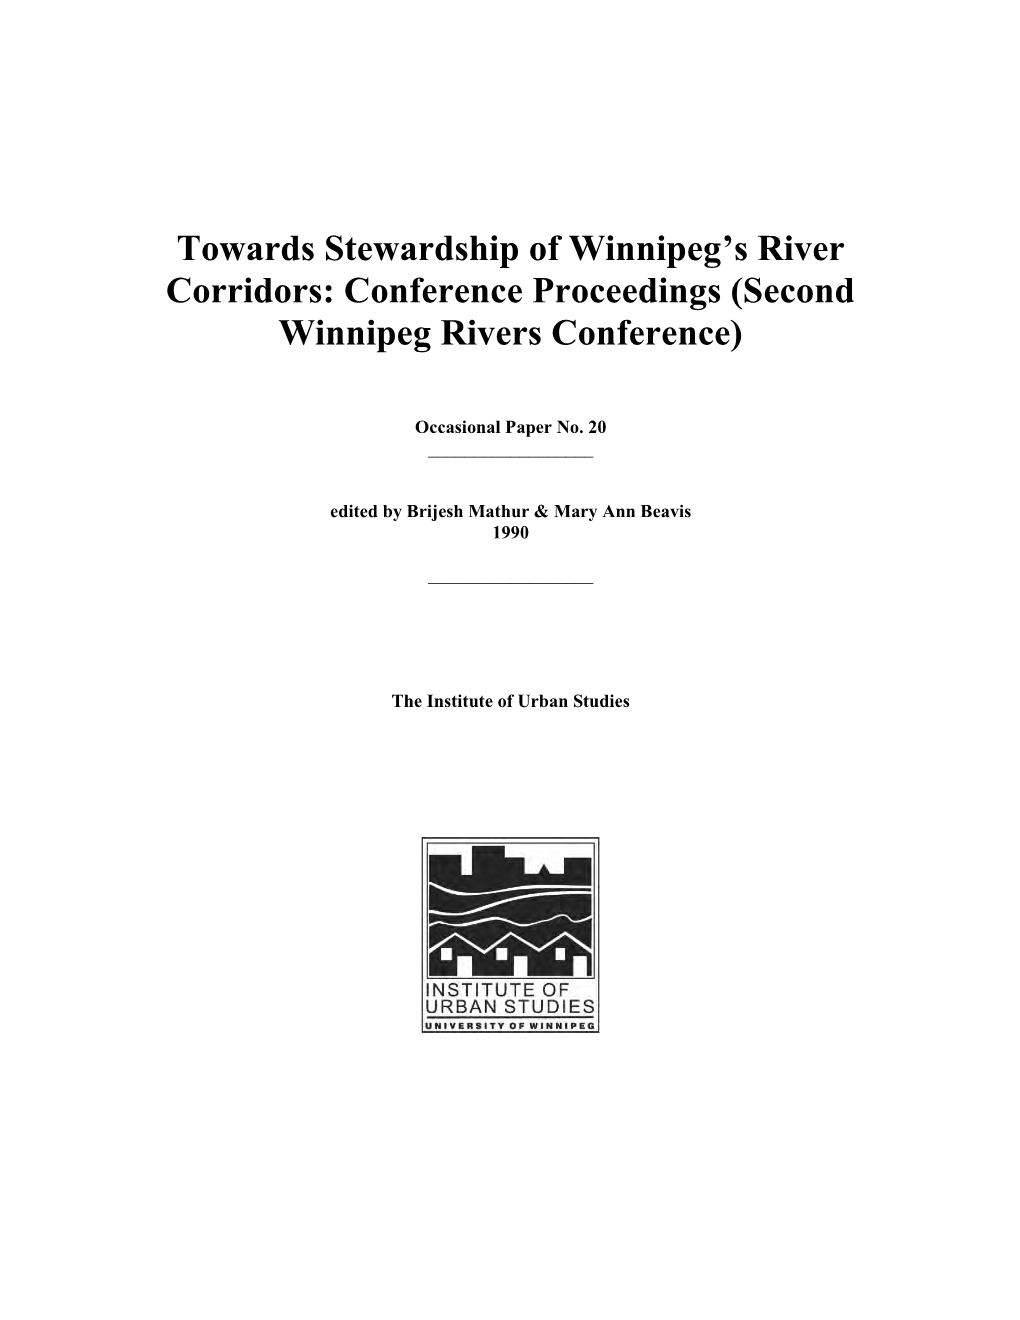 Towards Stewardship of Winnipeg's River Corridors: Conference